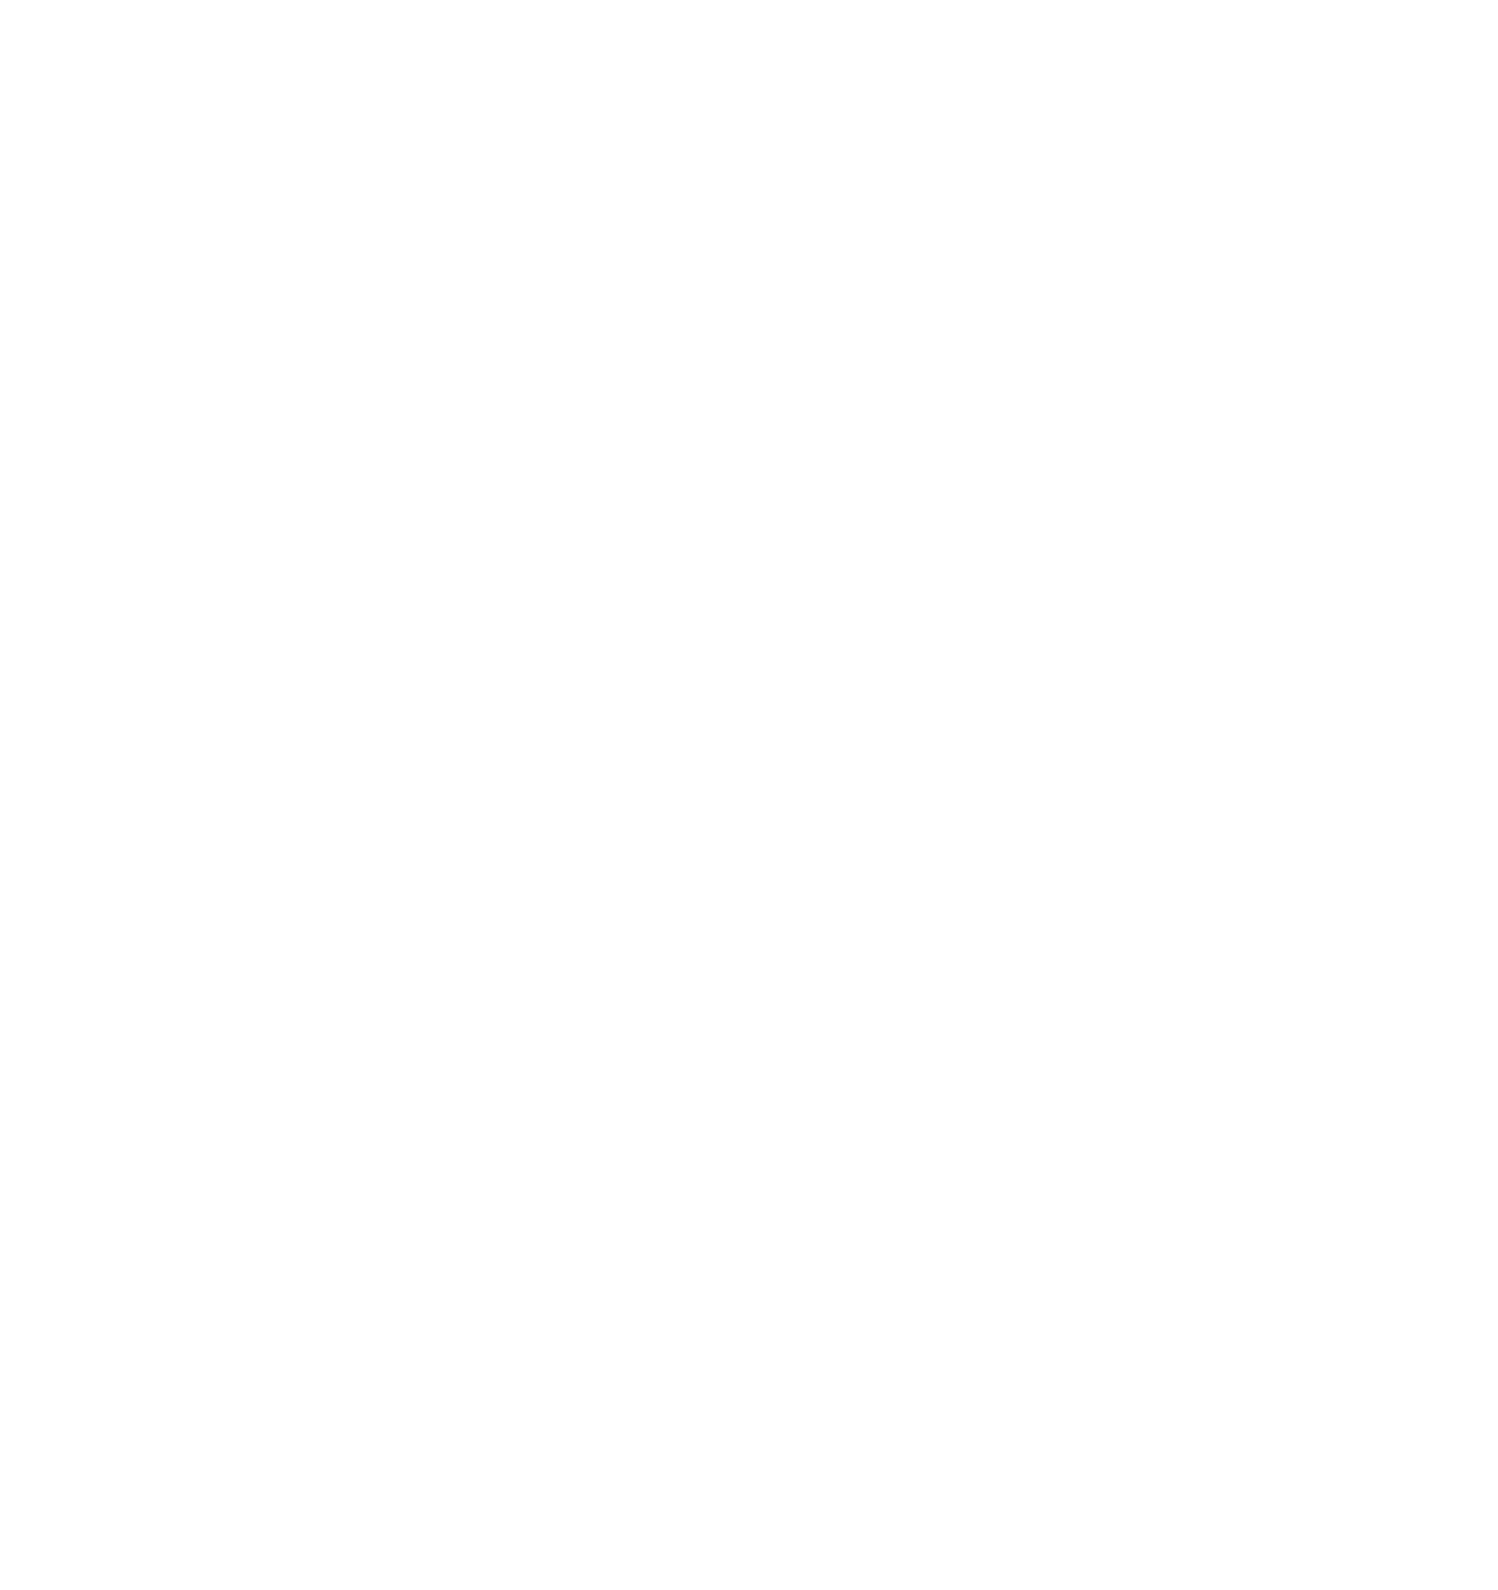 Elutia logo for dark backgrounds (transparent PNG)